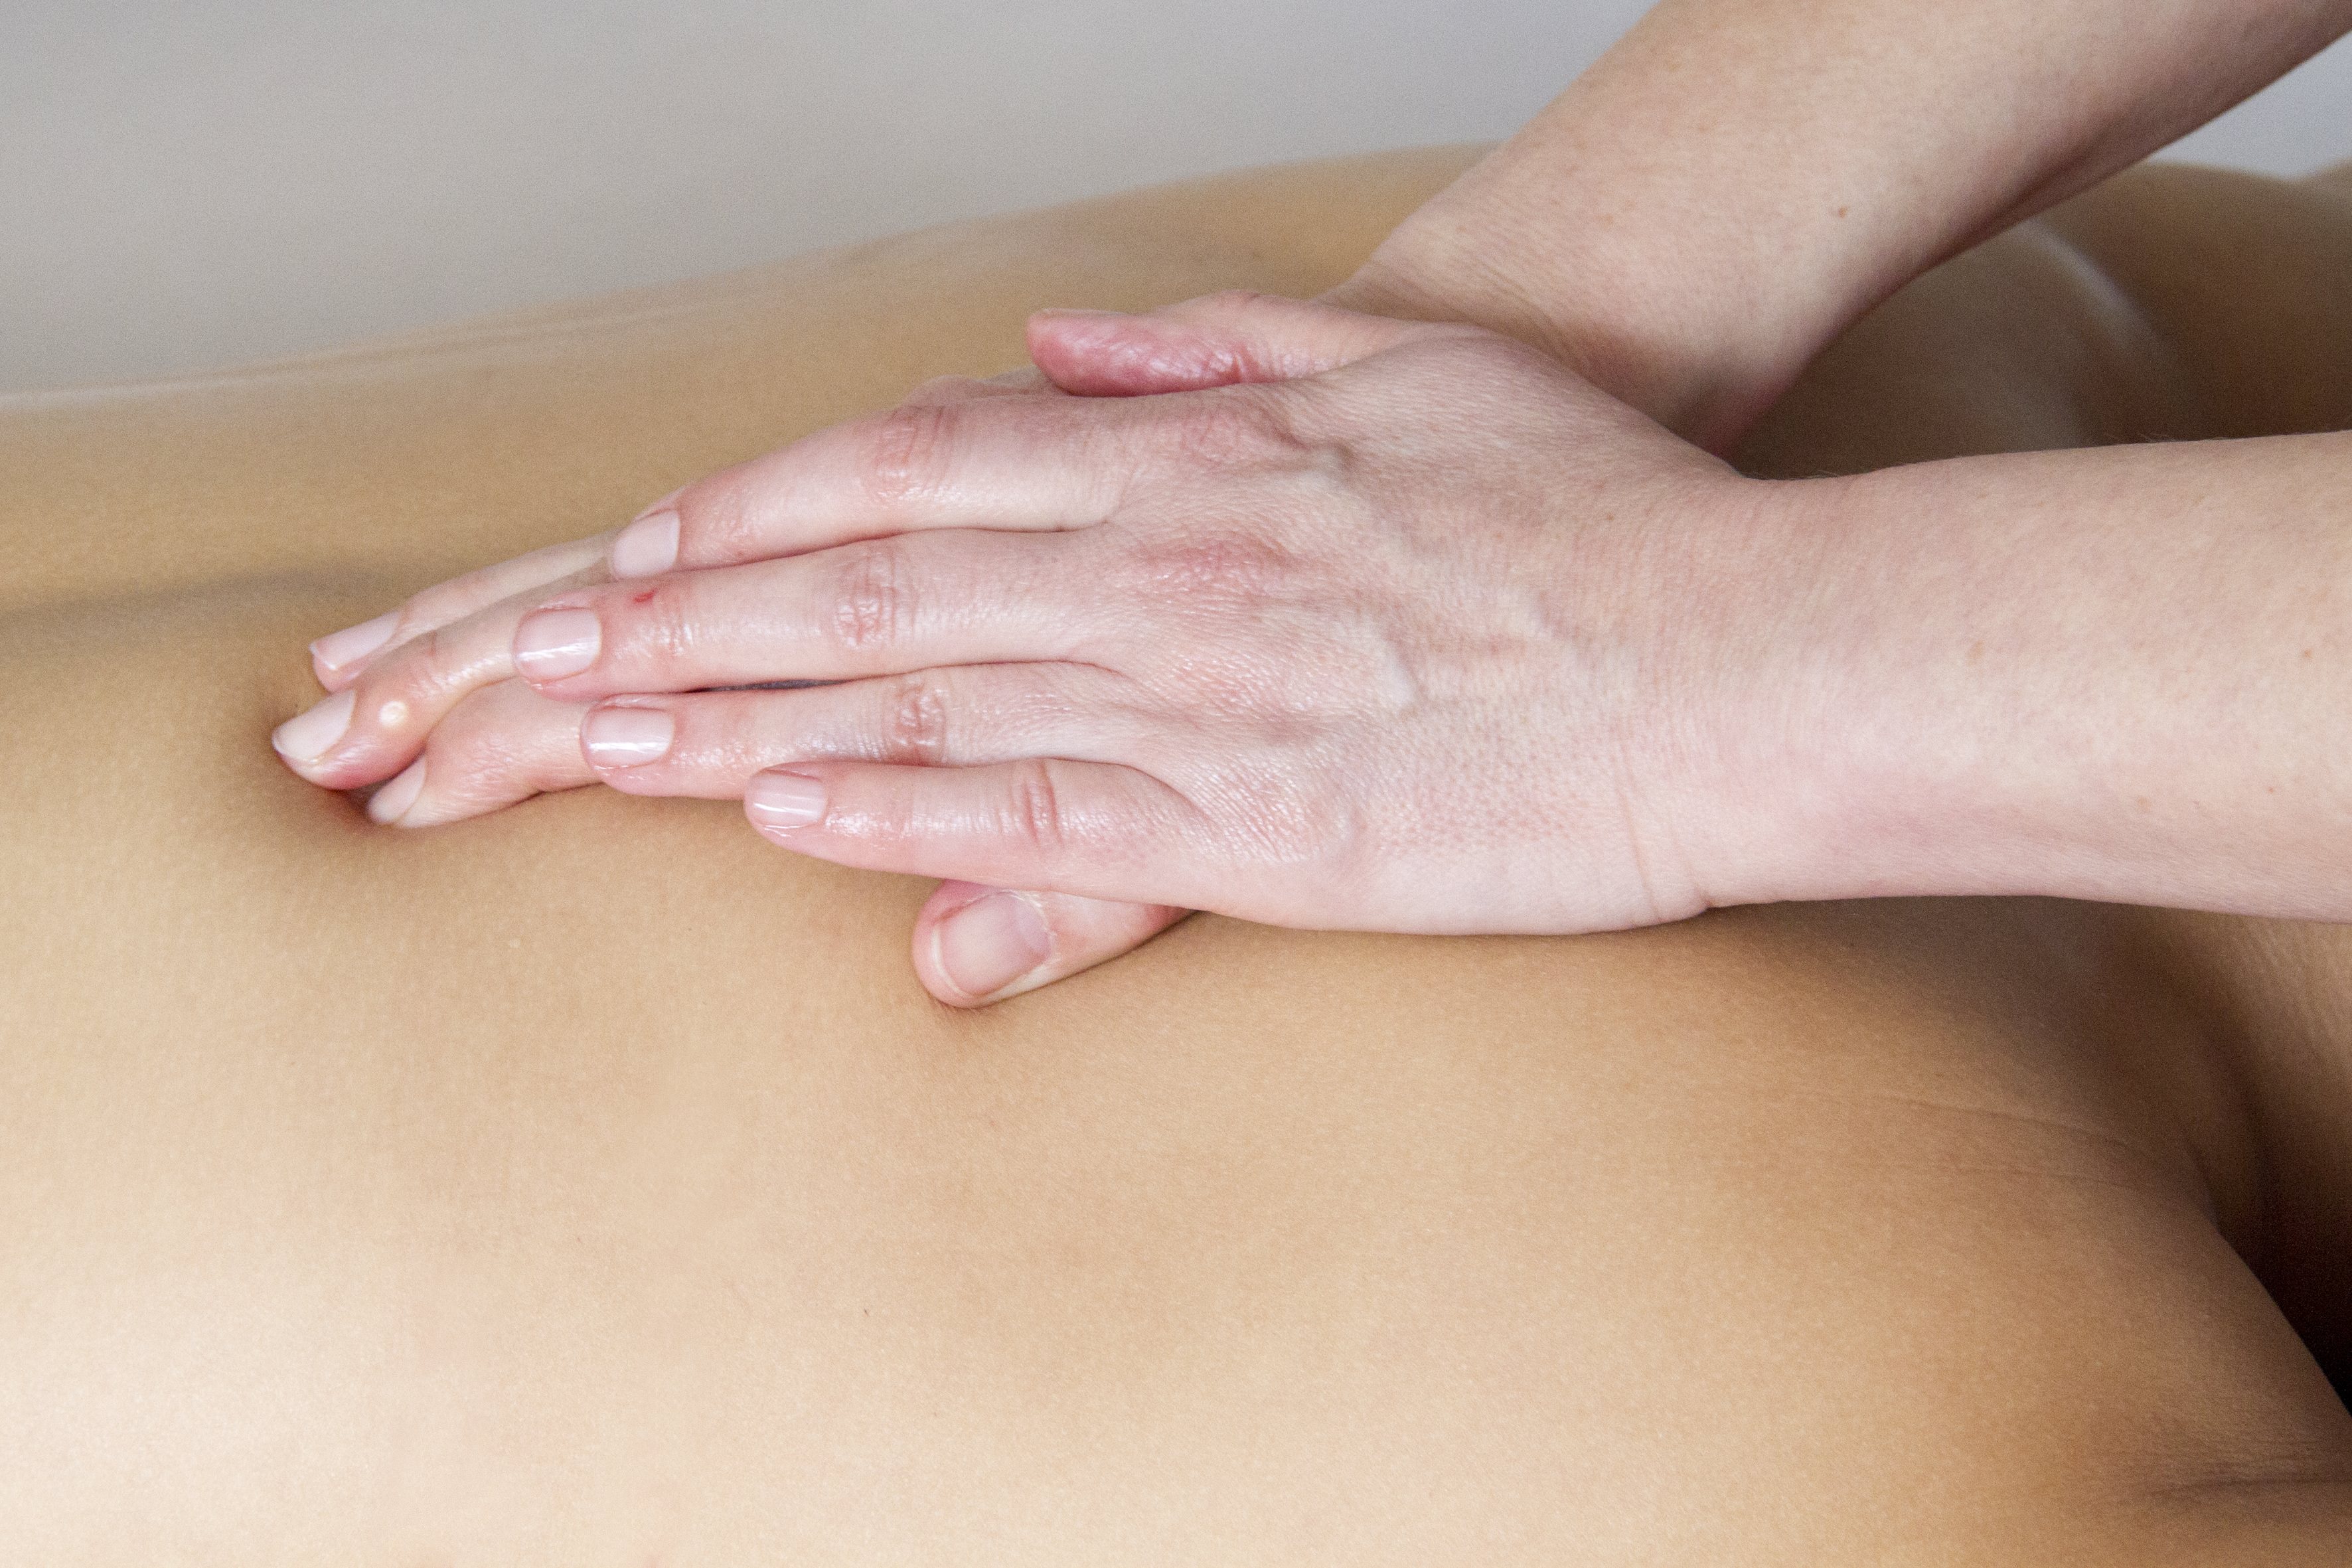 Popular Types of Massage